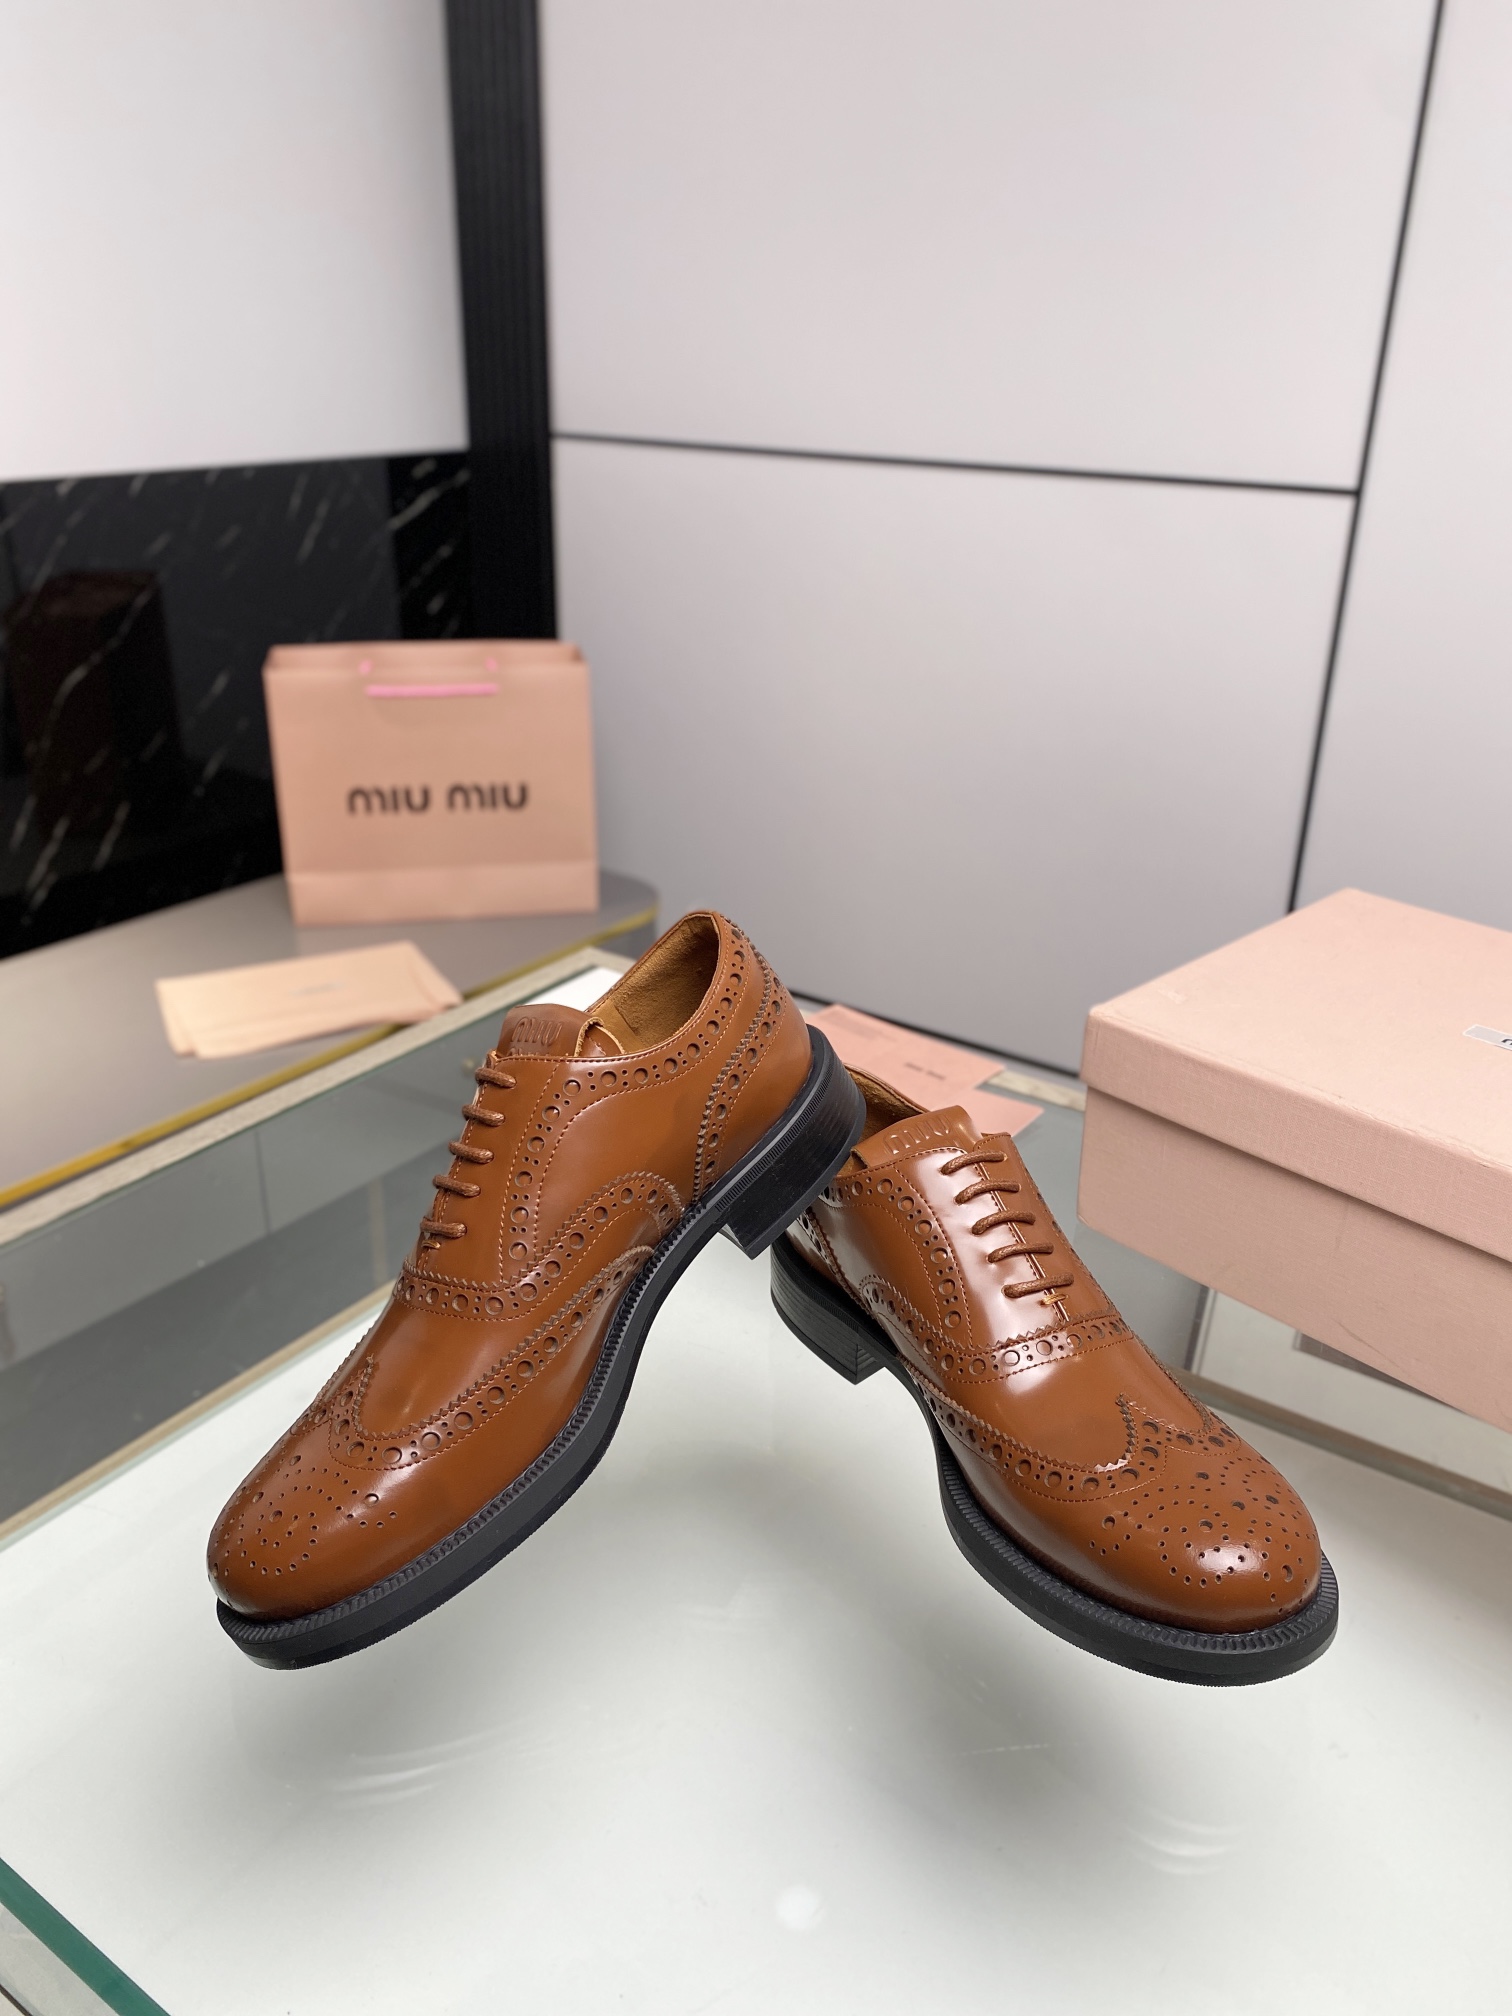 miumiu の スニーカーコピー 本革 ビジネス 革靴 軽量 歩きやすい 紳士靴 通気 シューズ  人気 ブラウン_1